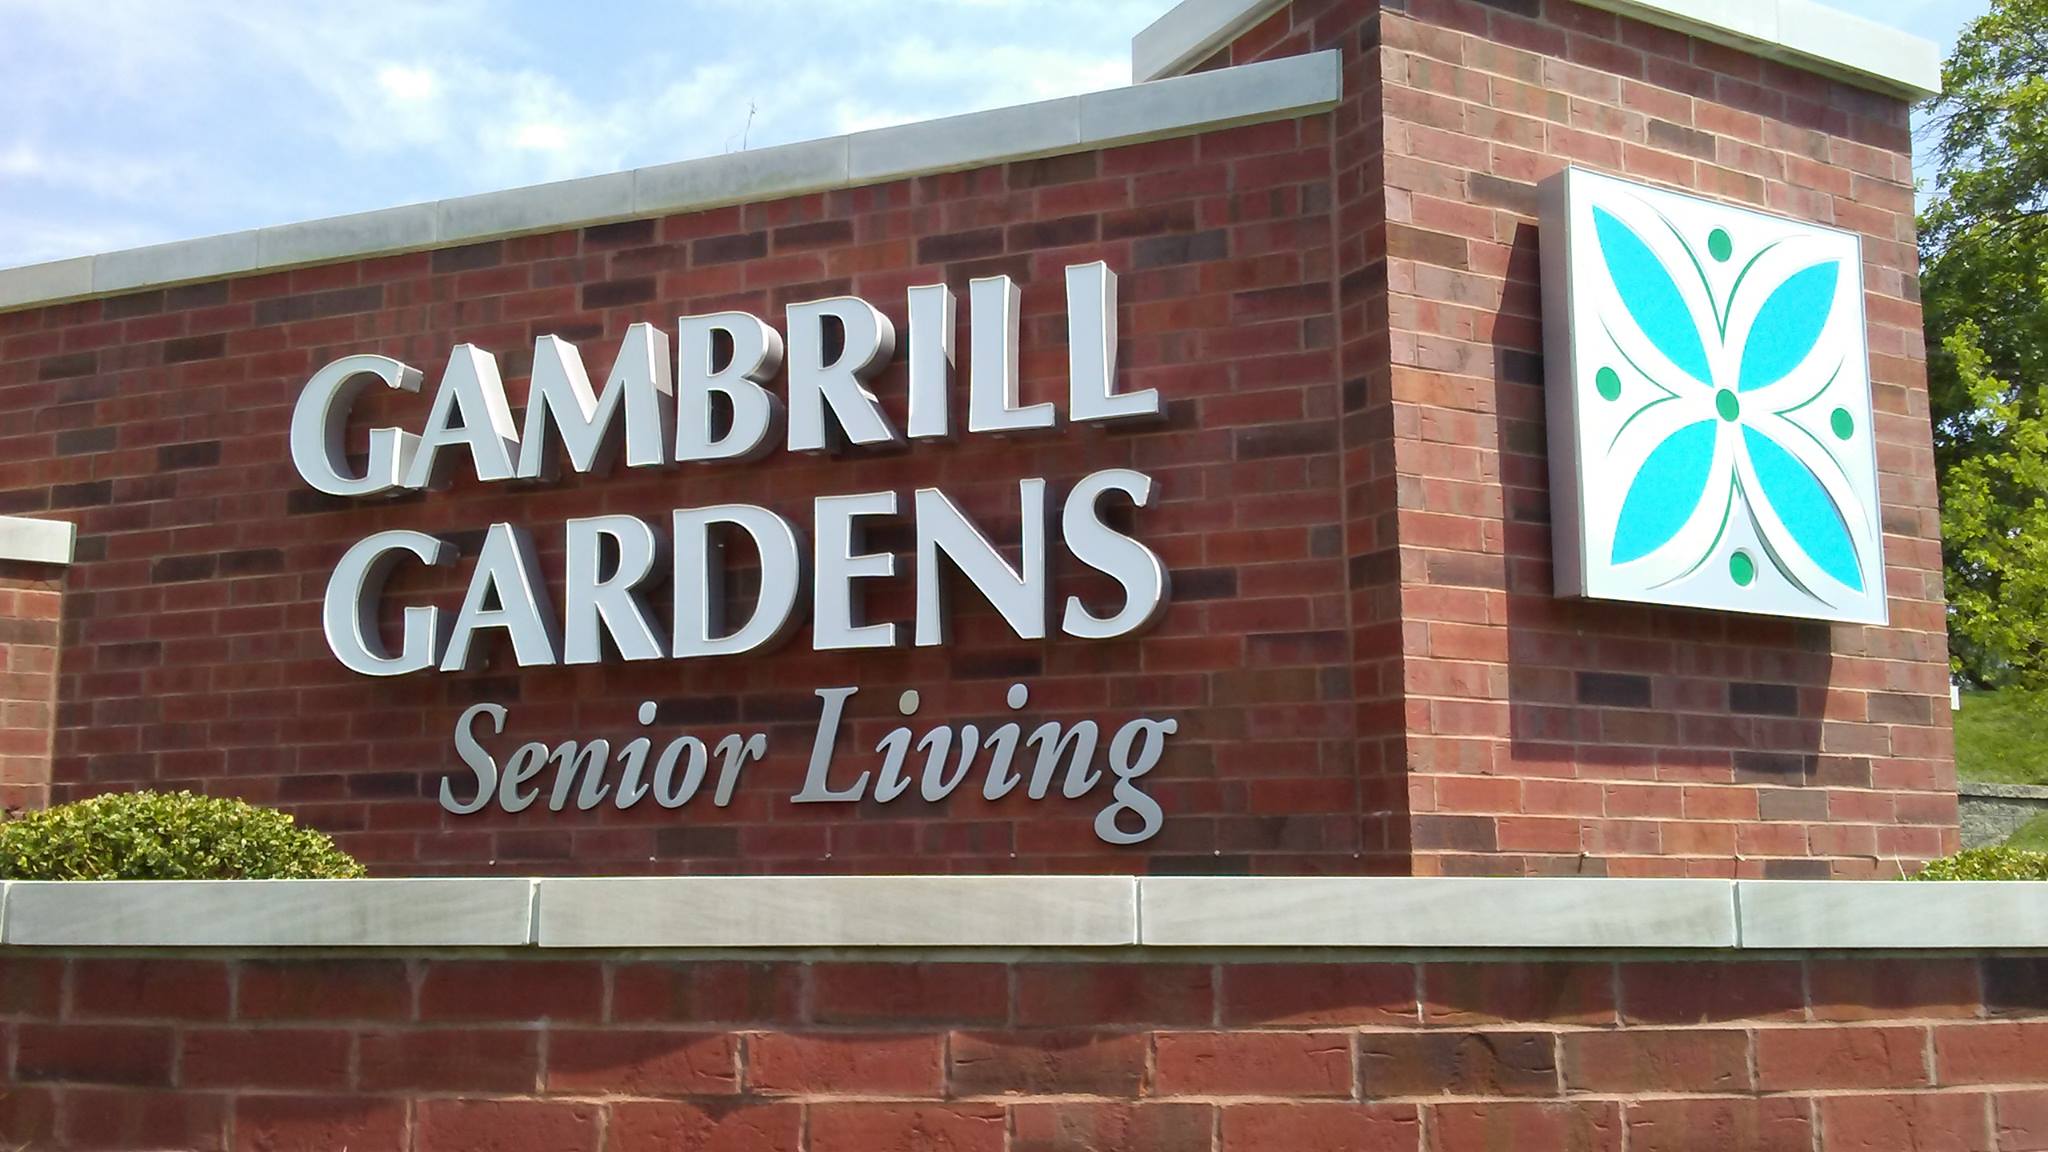 Gambrill Gardens